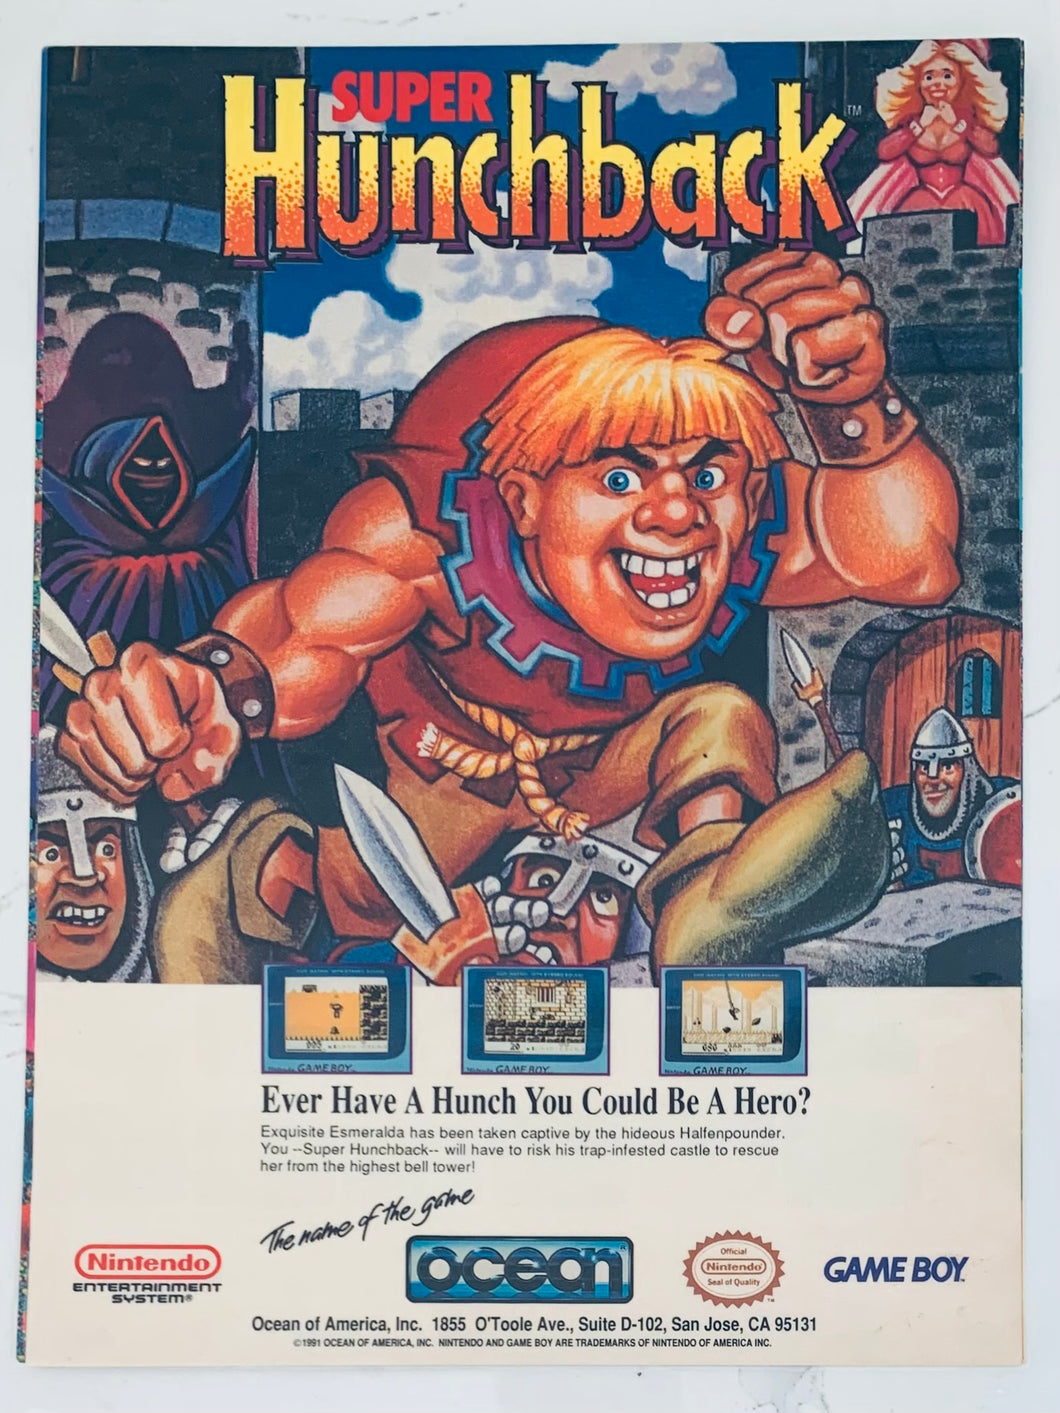 Super Hunchback - NES GB - Original Vintage Advertisement - Print Ads - Laminated A4 Poster